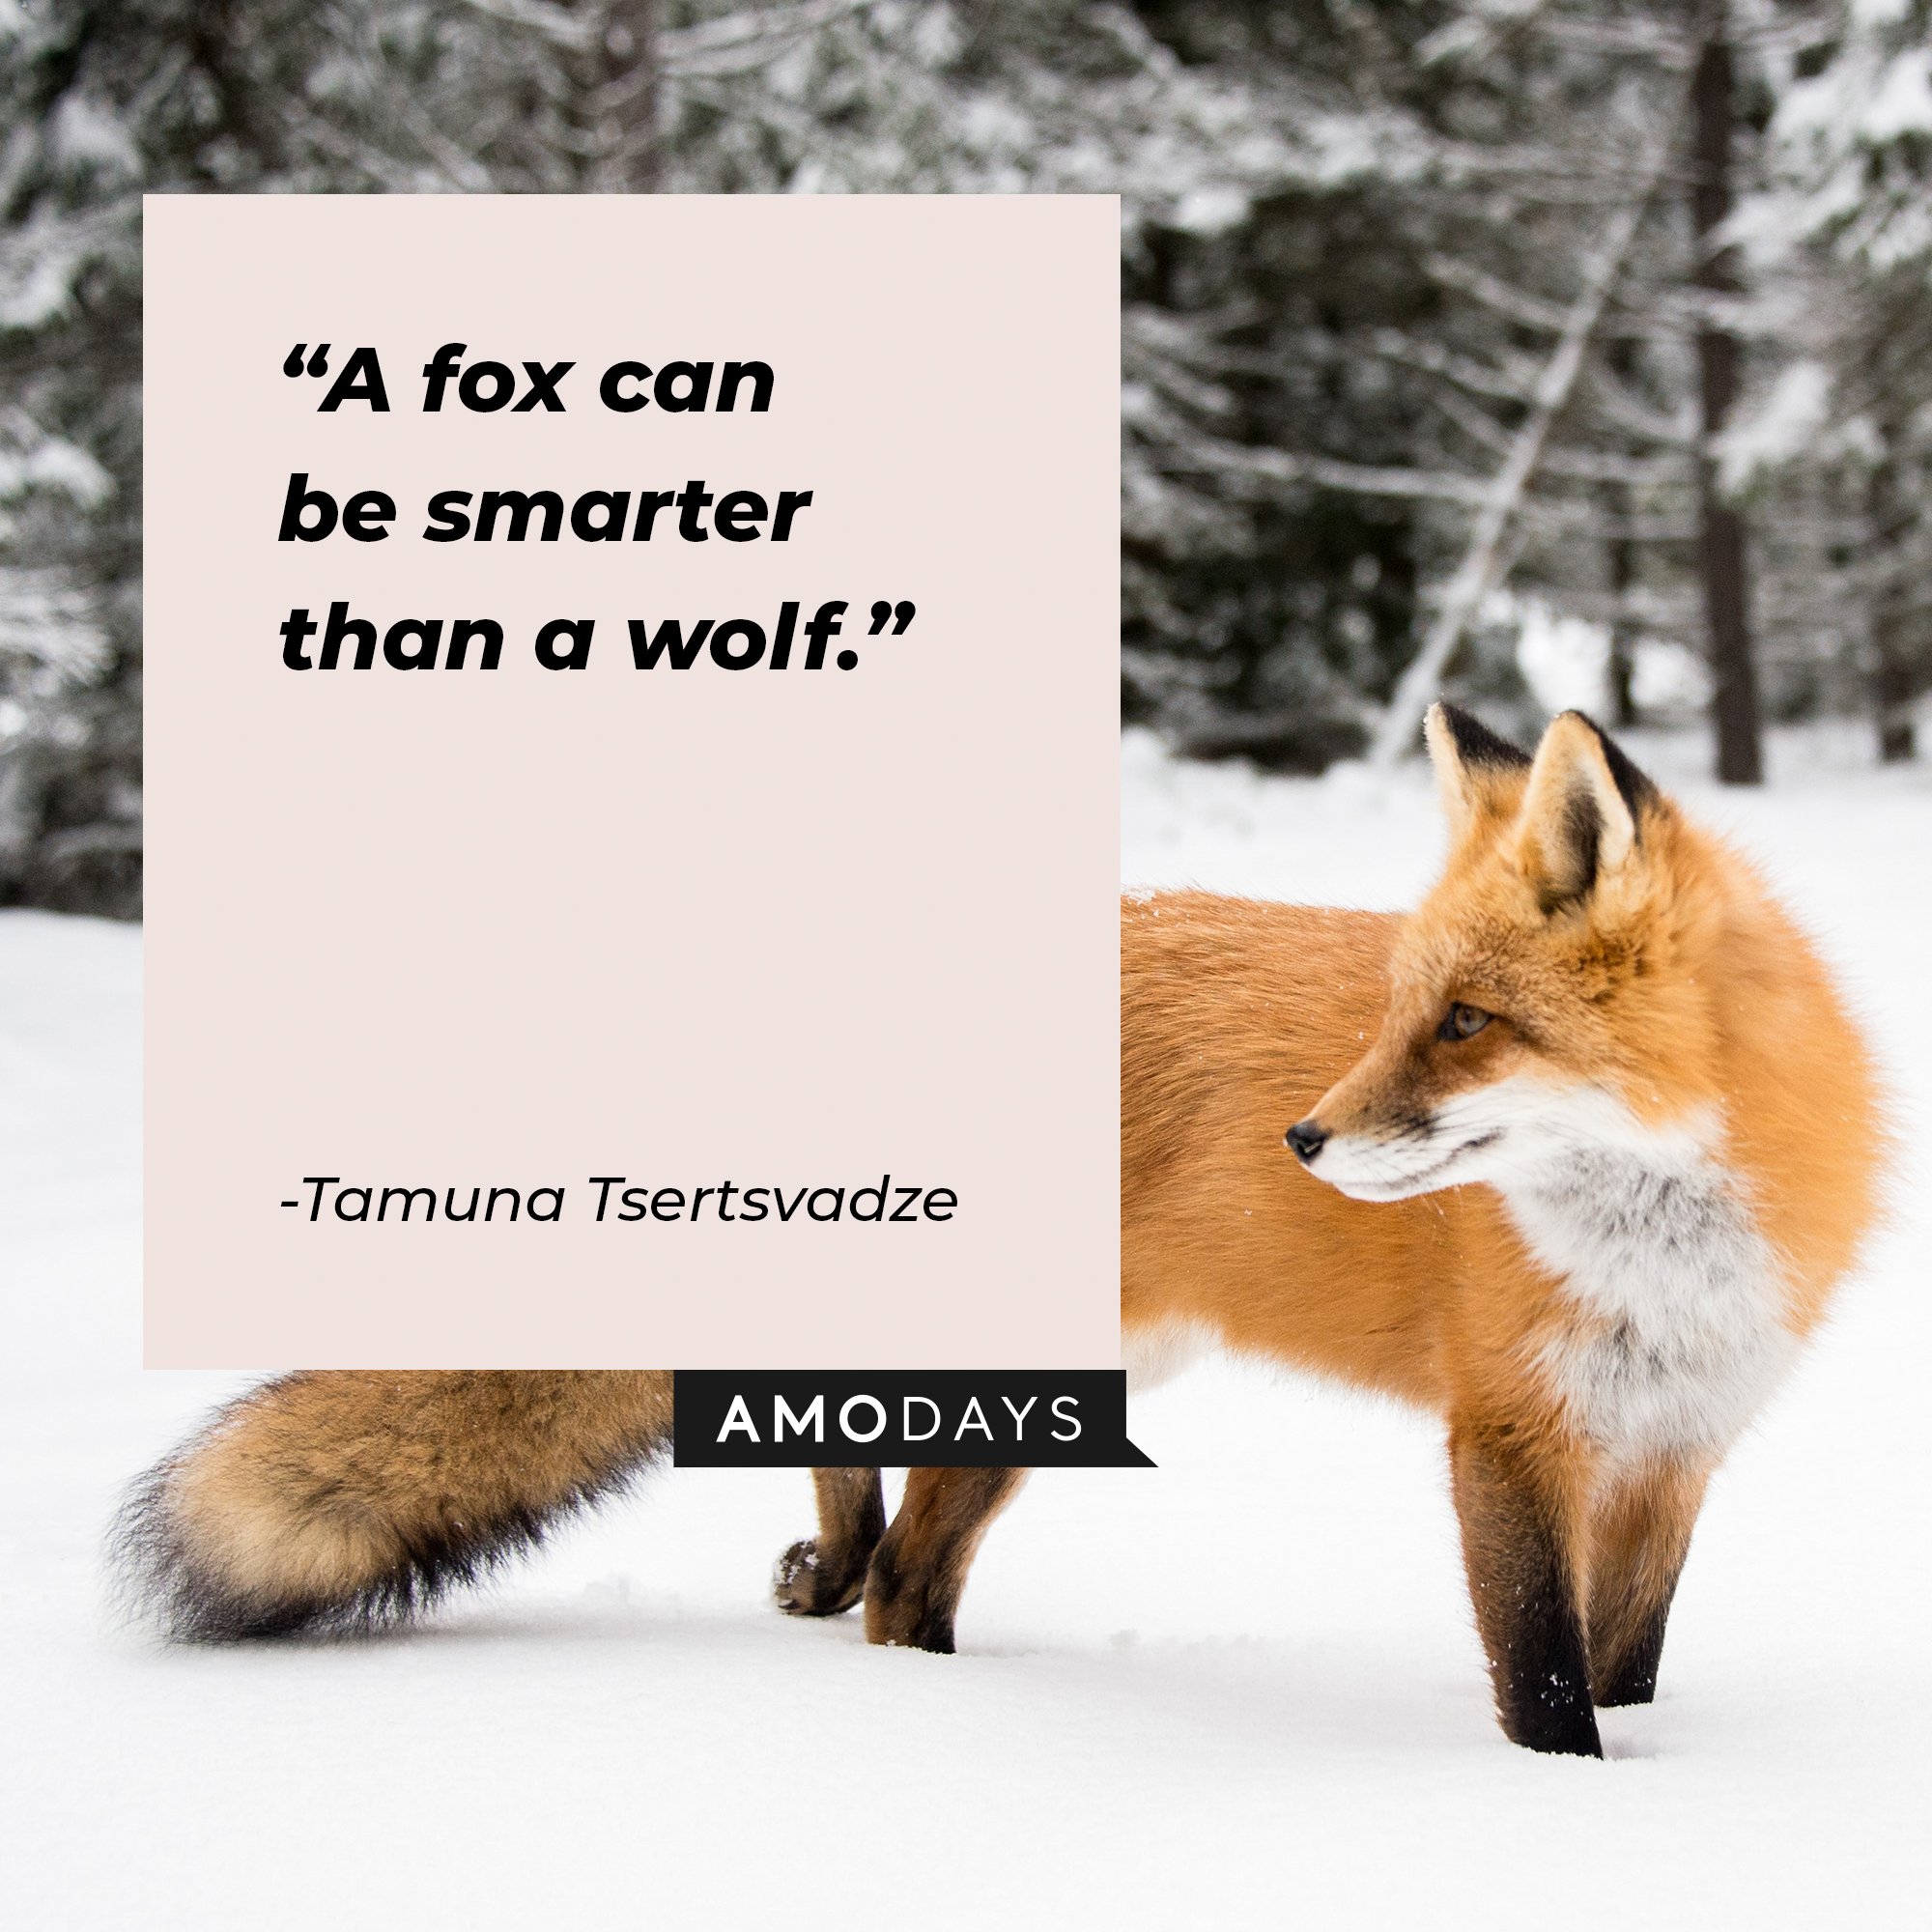 Tamuna Tsertsvadze's quote: "A fox can be smarter than a wolf." | Image: AmoDays